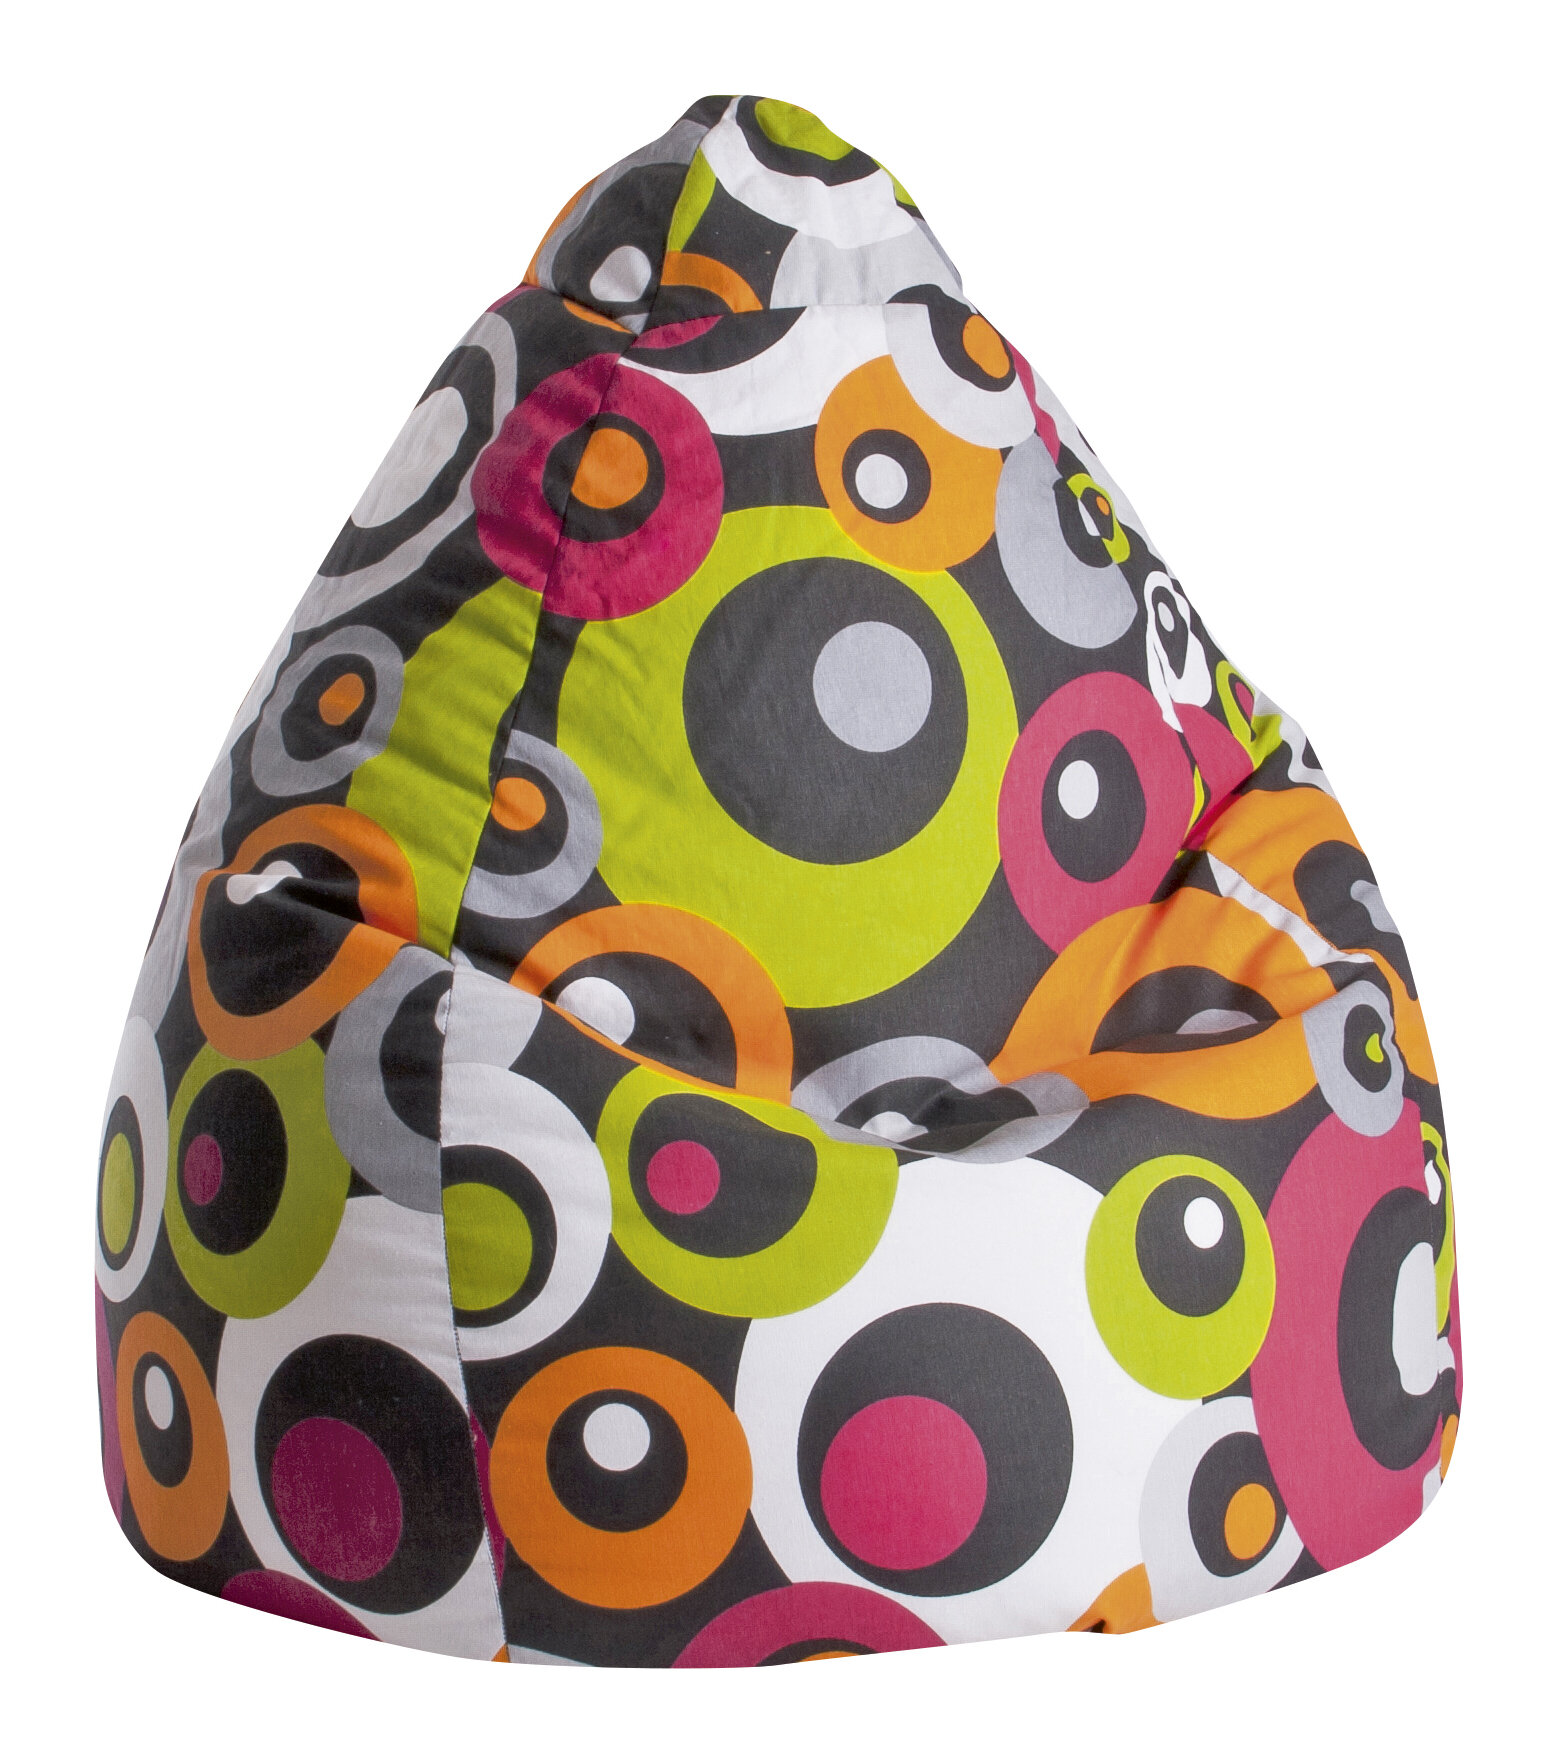 & Kids Zoomie Chair Cotton Bean | Wayfair Bag Lounger 100%